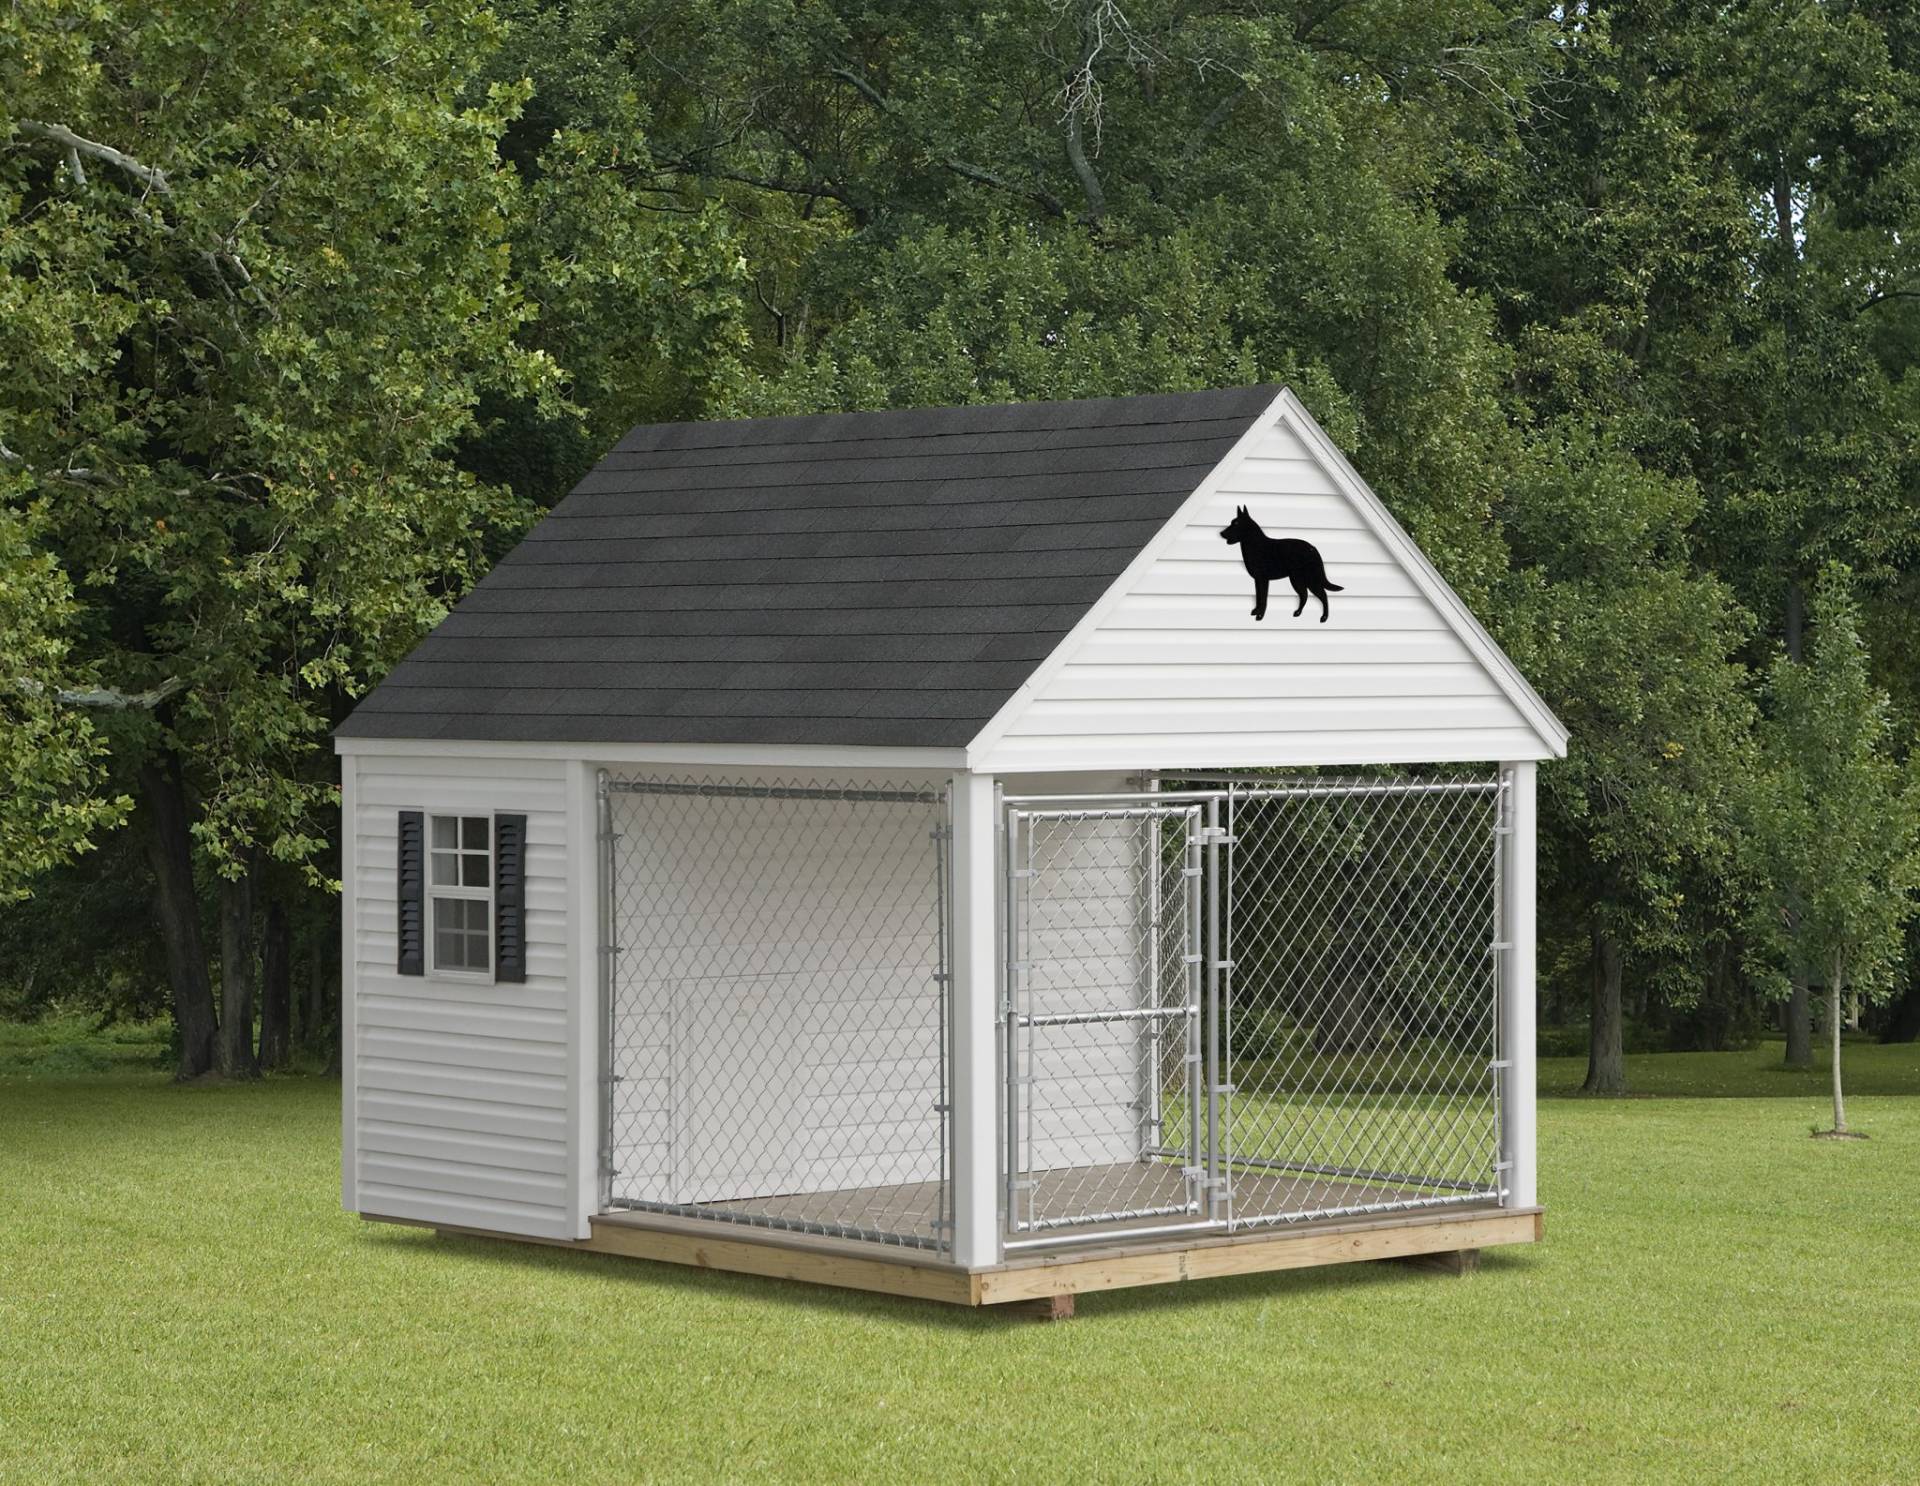 https://www.amishbackyardstructures.com/wp-content/uploads/2017/09/outdoor-dog-kennels-scaled.jpg